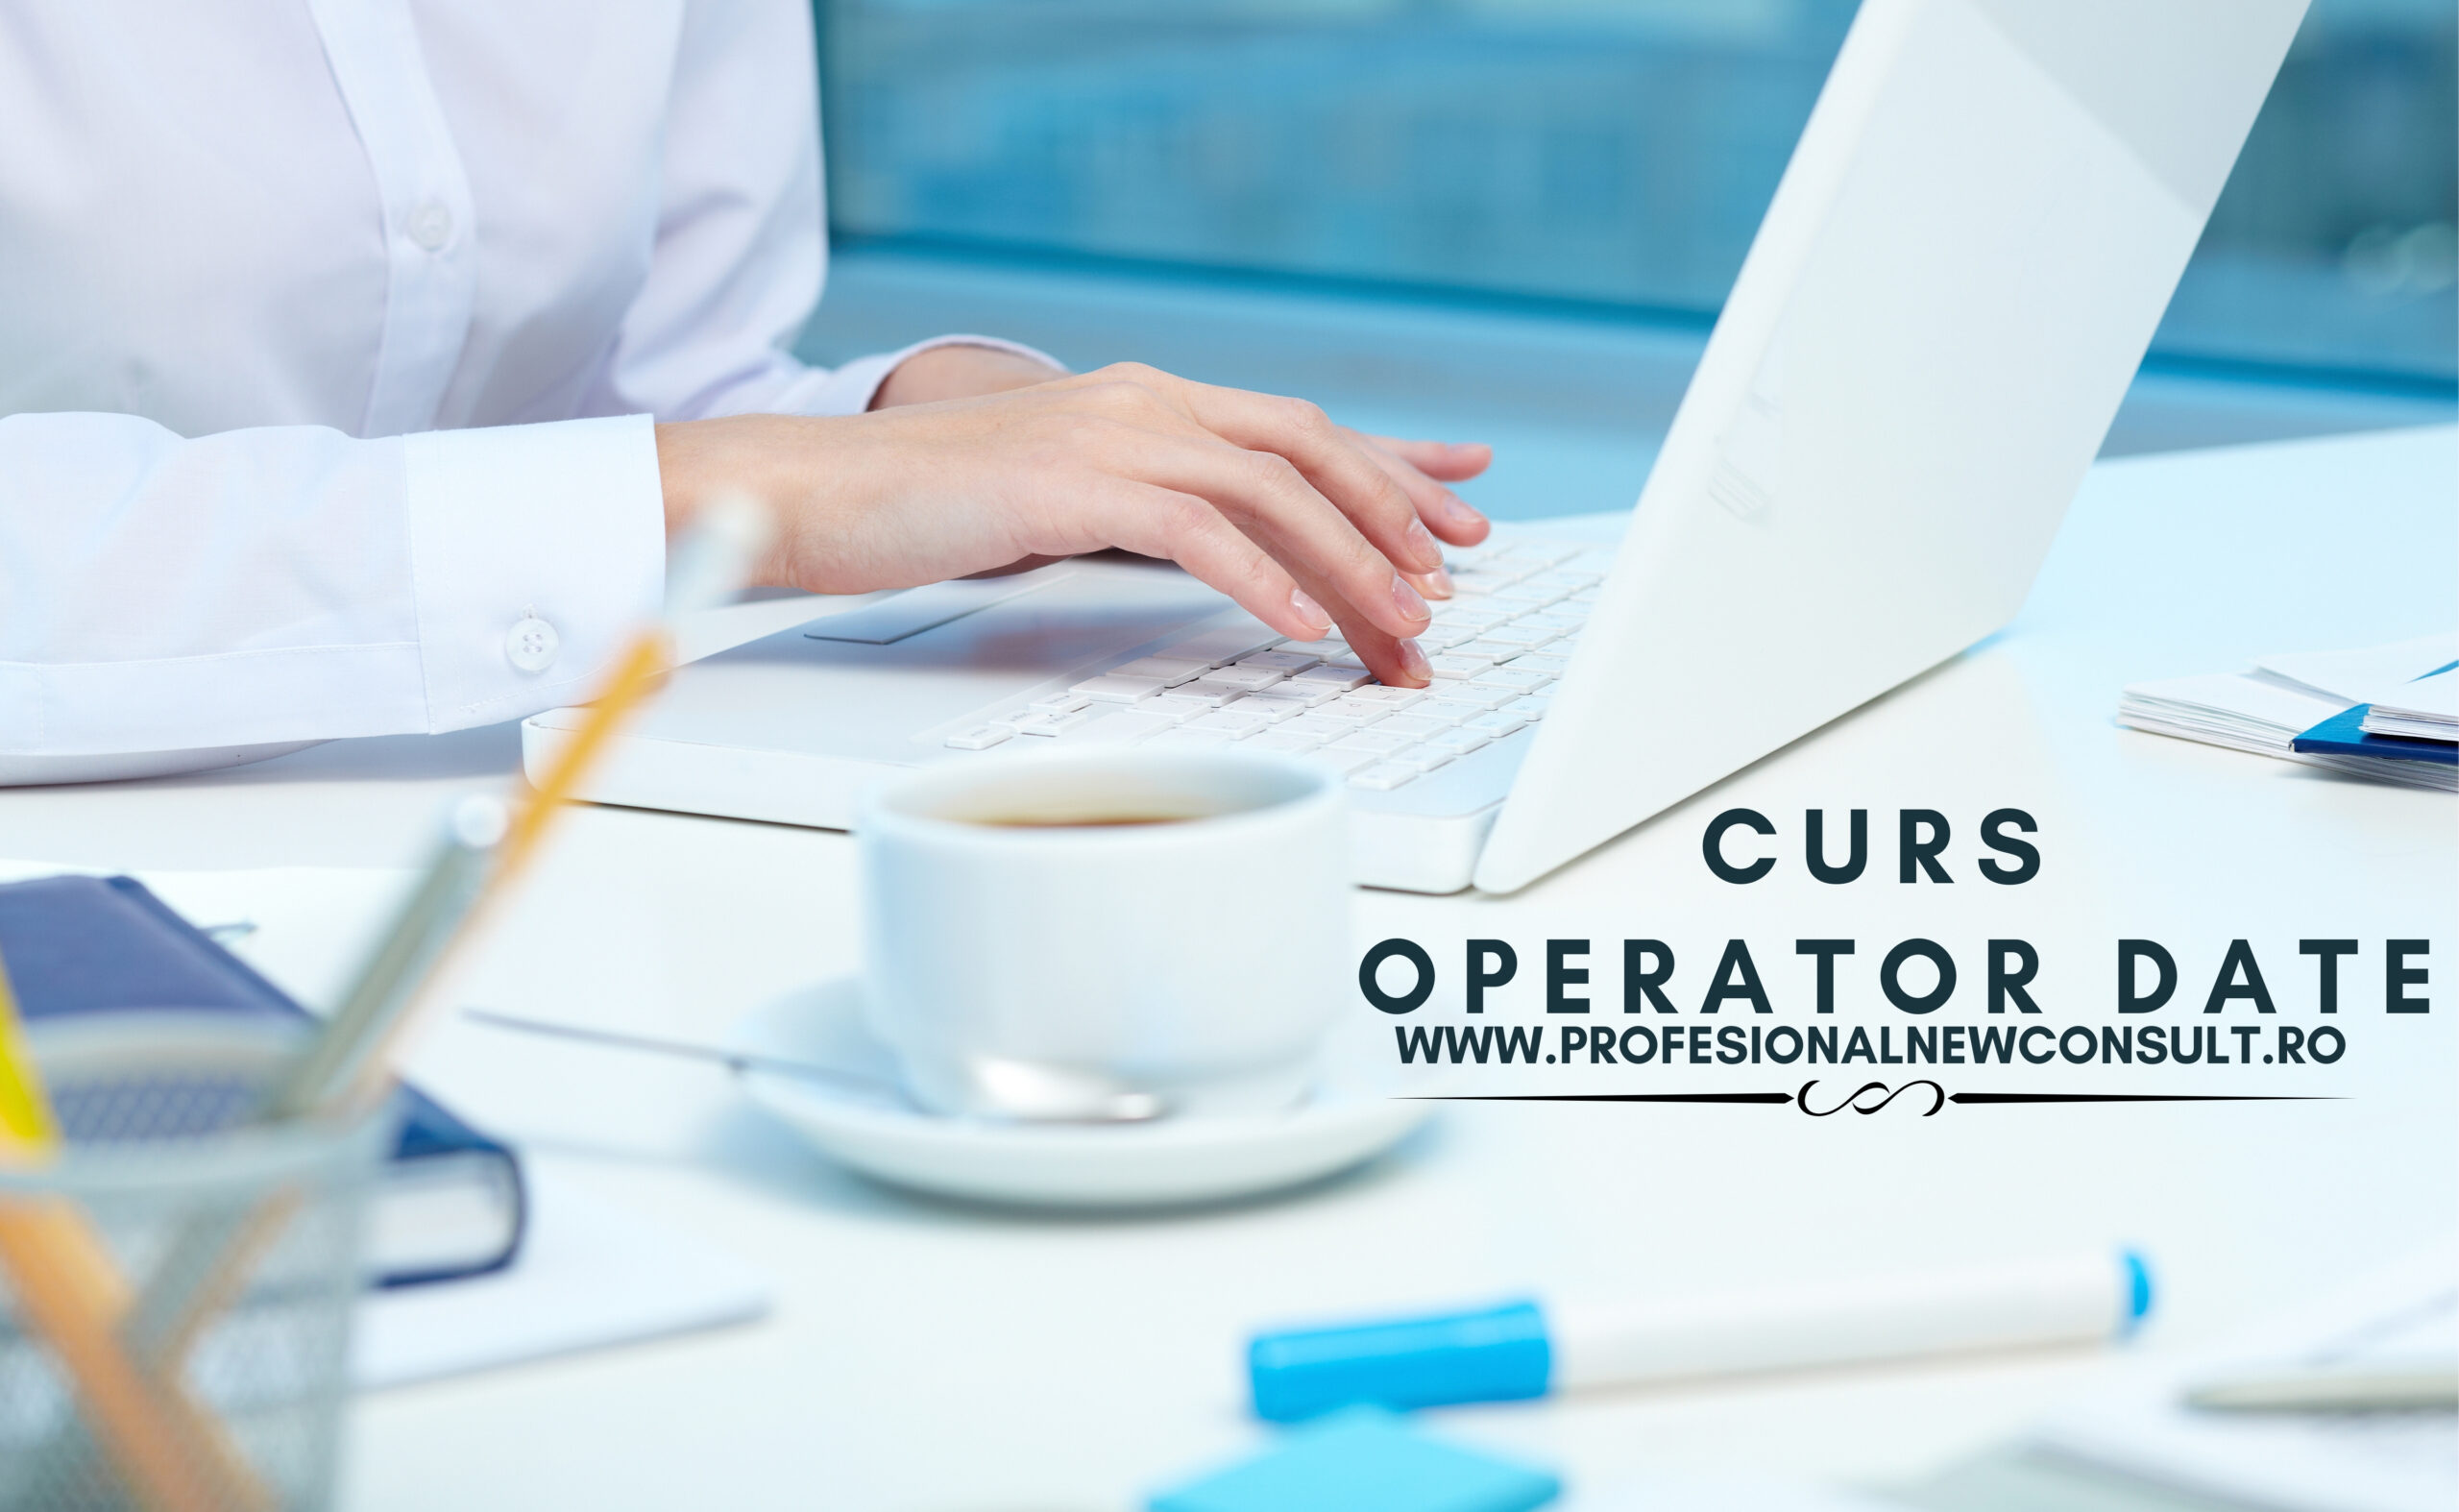 Profesional New Consult: Curs acreditat de Operator Calculator